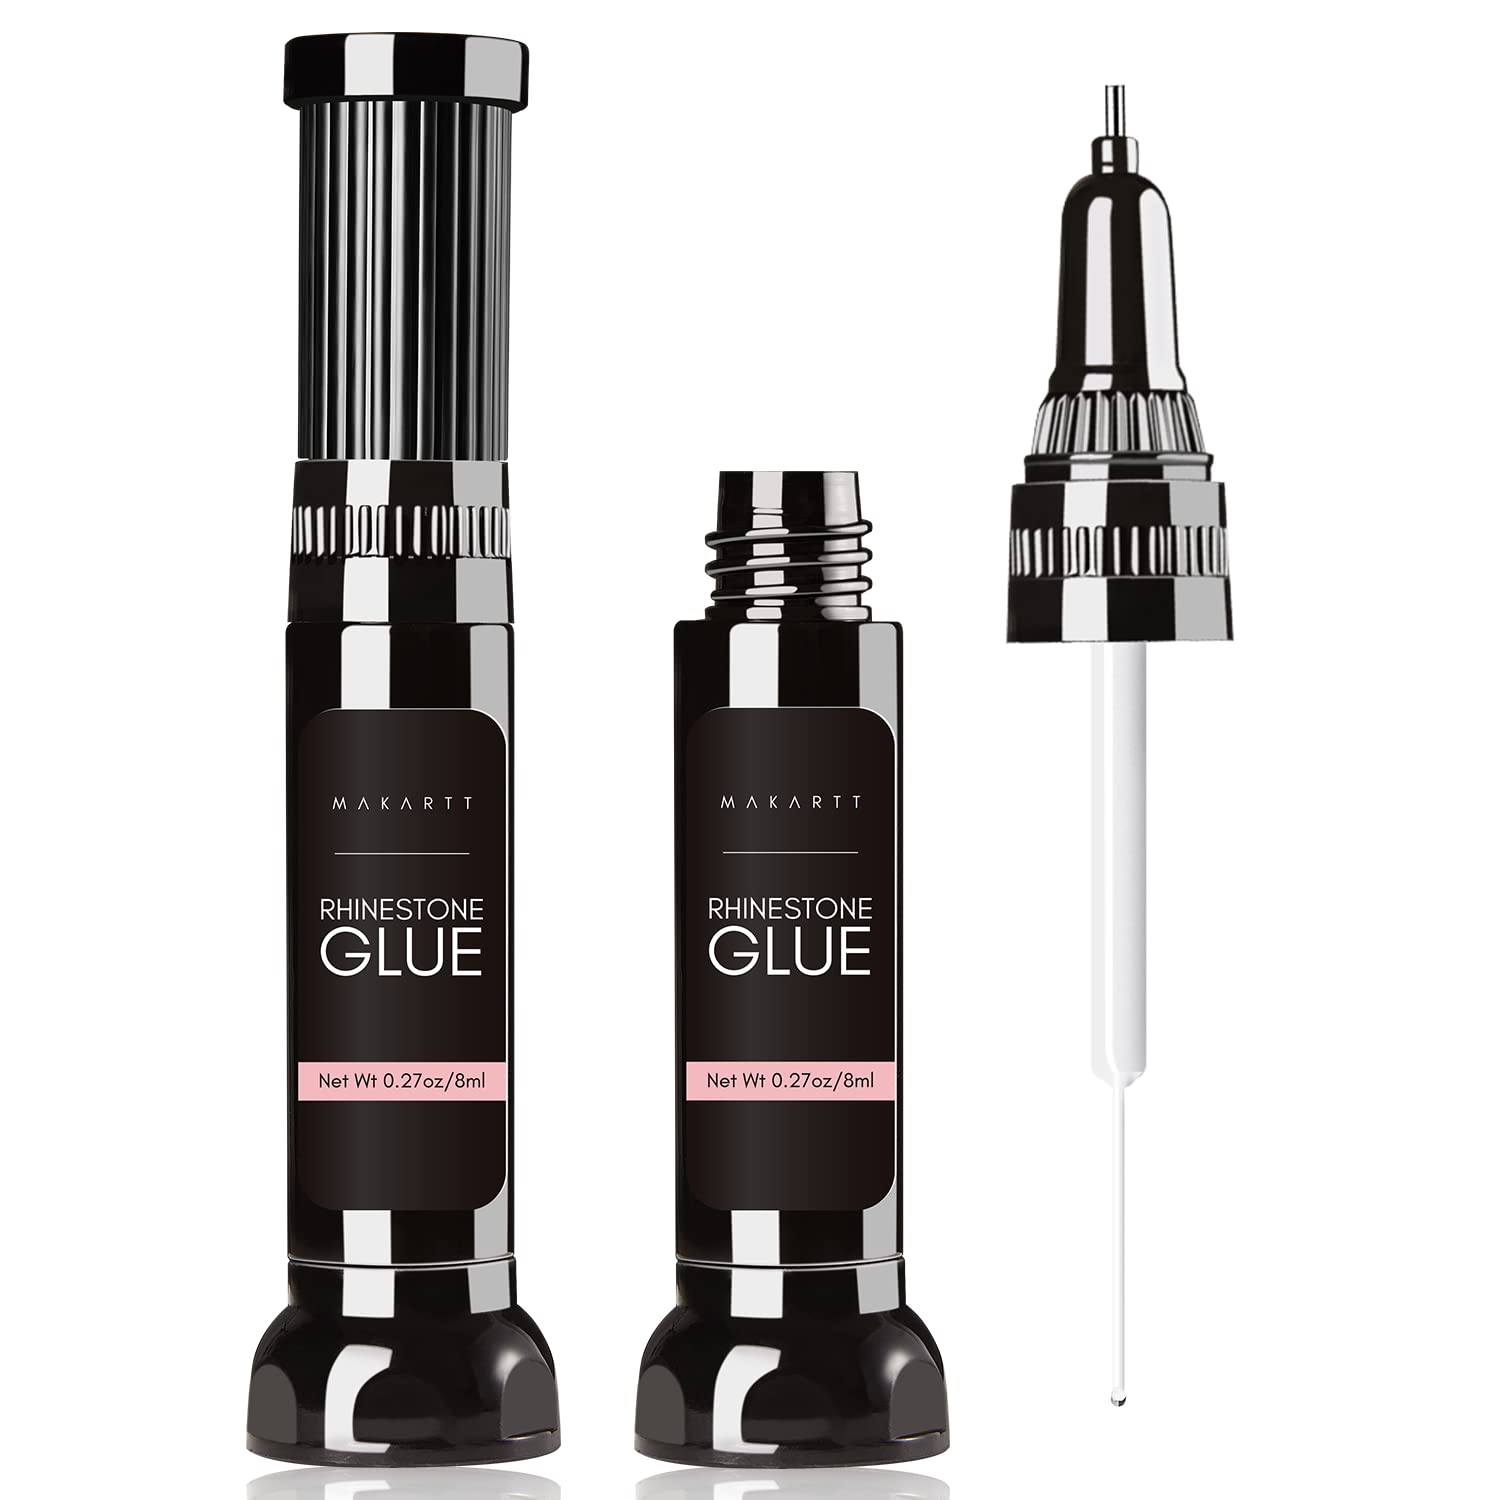 Rhinestone Glue Kit Precision